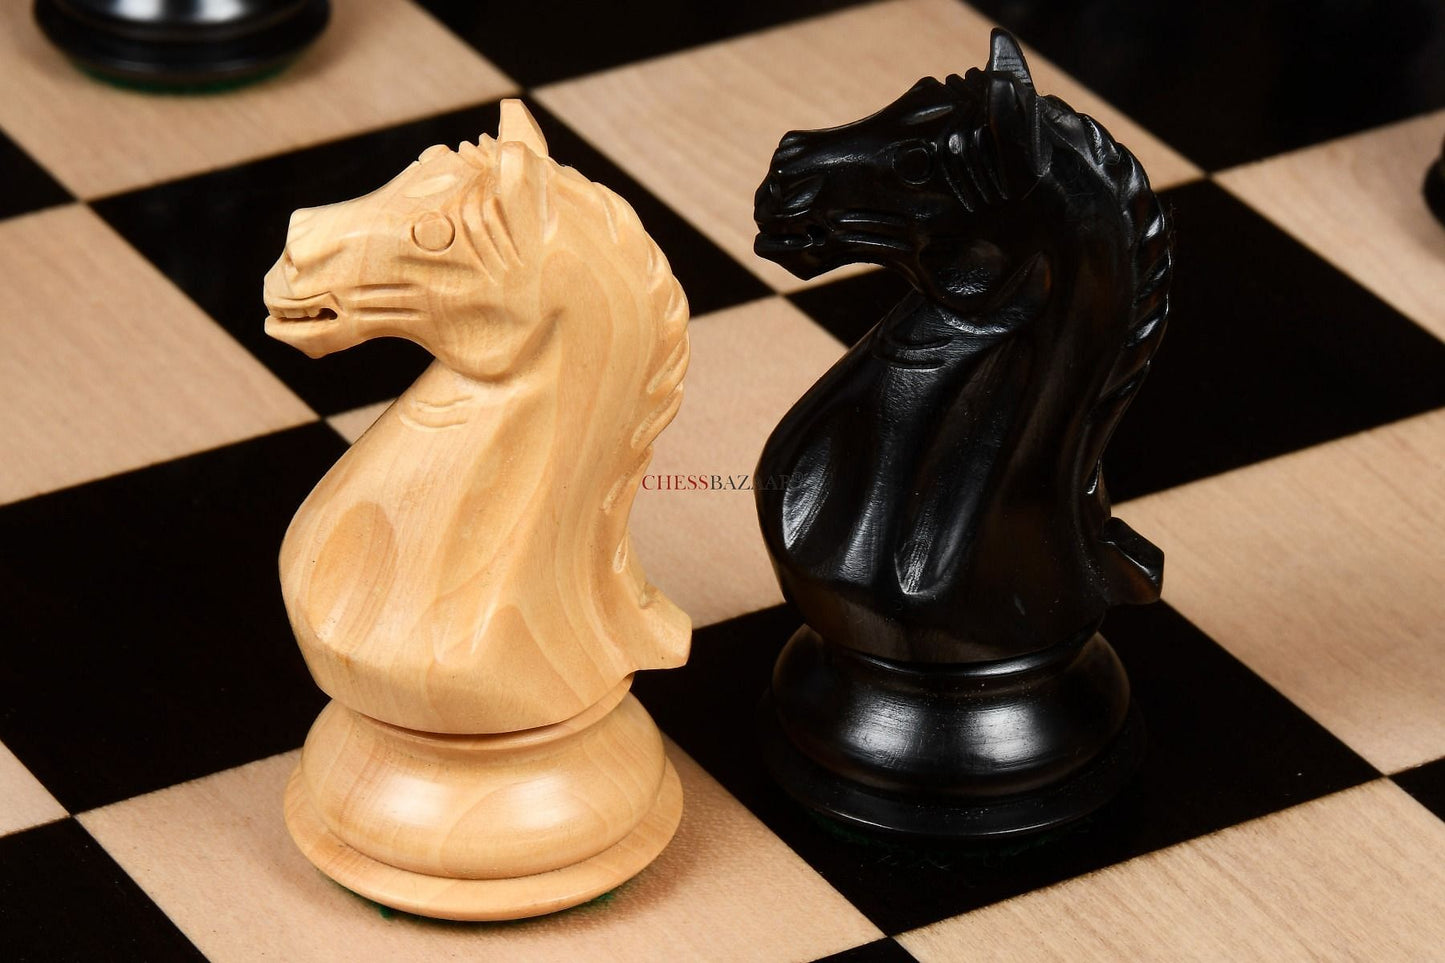 The Fierce Knight Staunton Wooden Chess Pieces in Ebonized Boxwood & Box Wood - 4.0" King